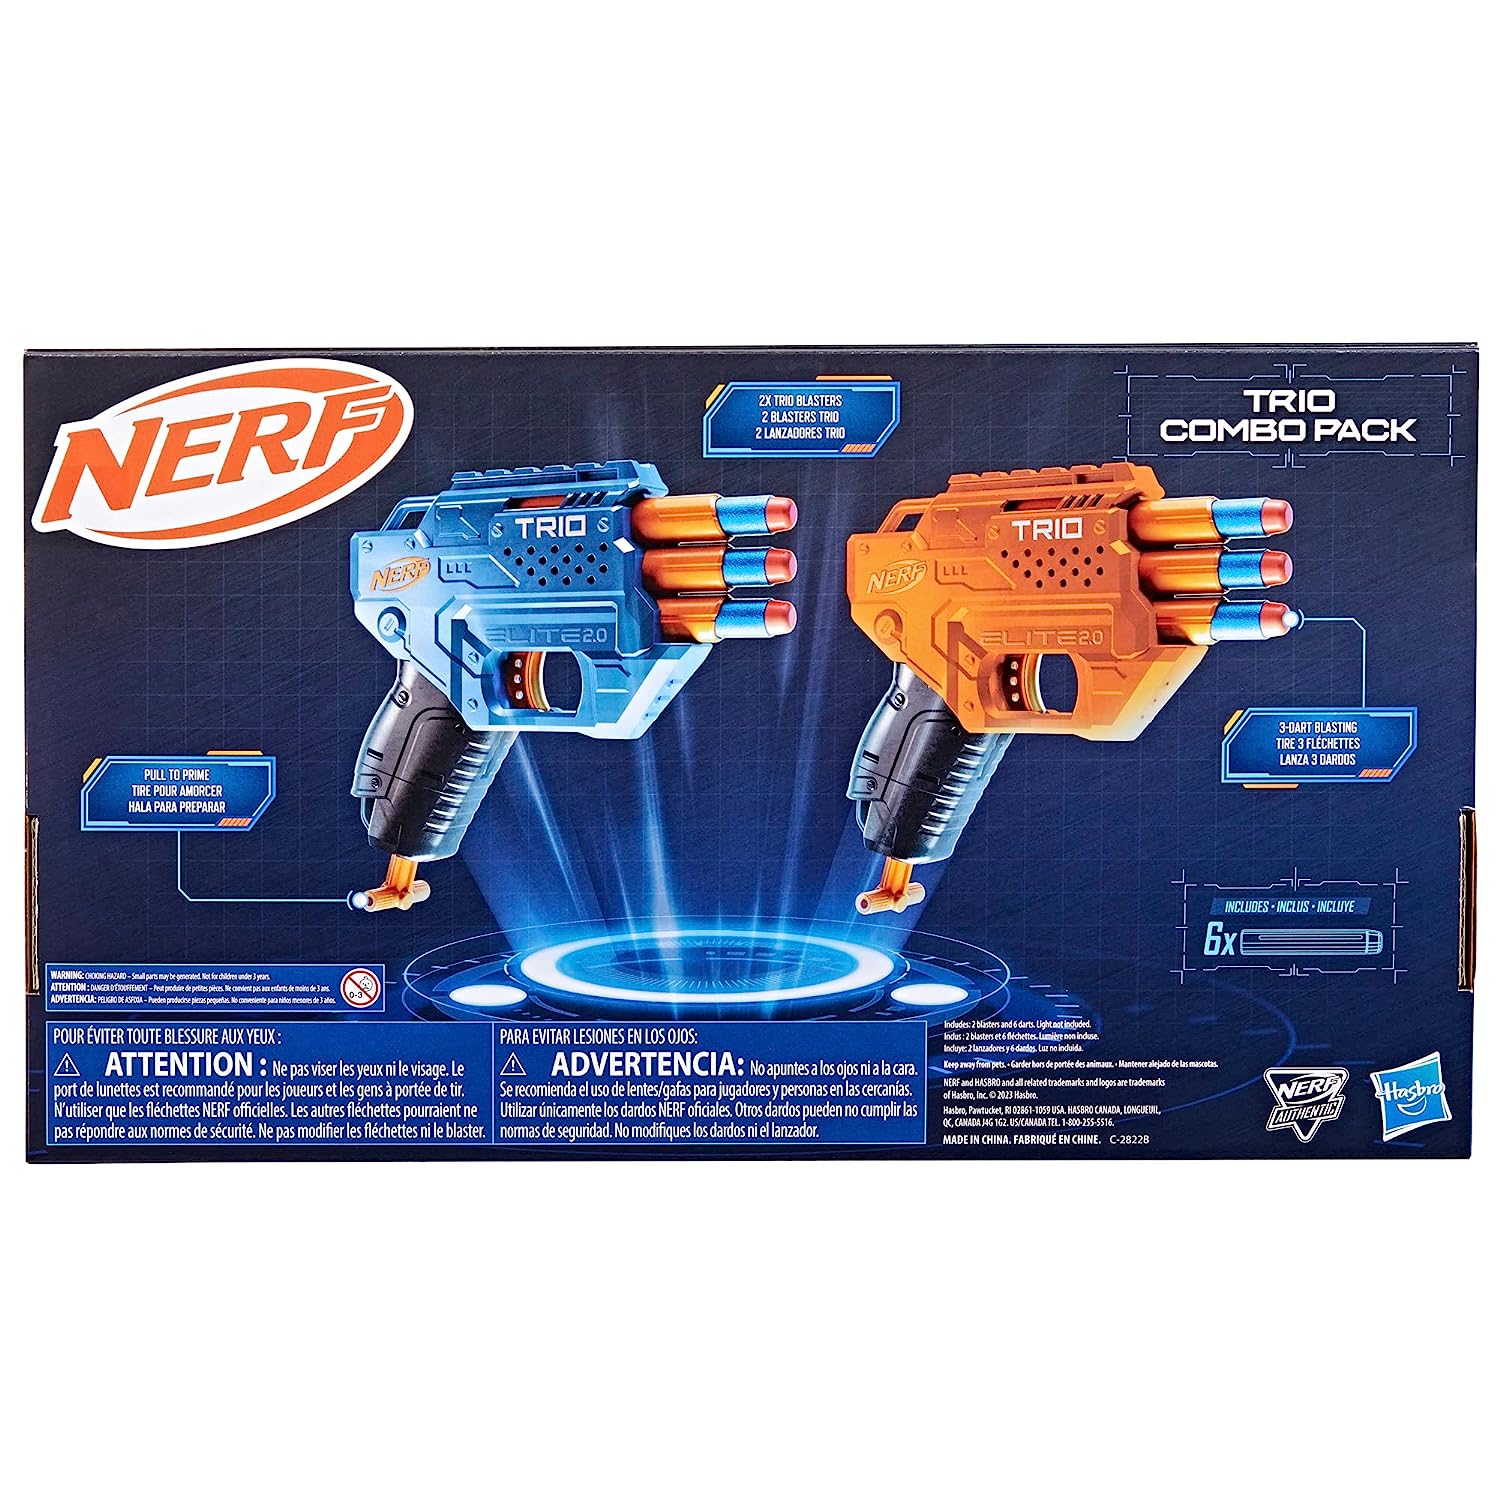 Nerf Elite 2.0 Trio Combo Pack, 2 Trio Nerf Blasters - Blue and Orange